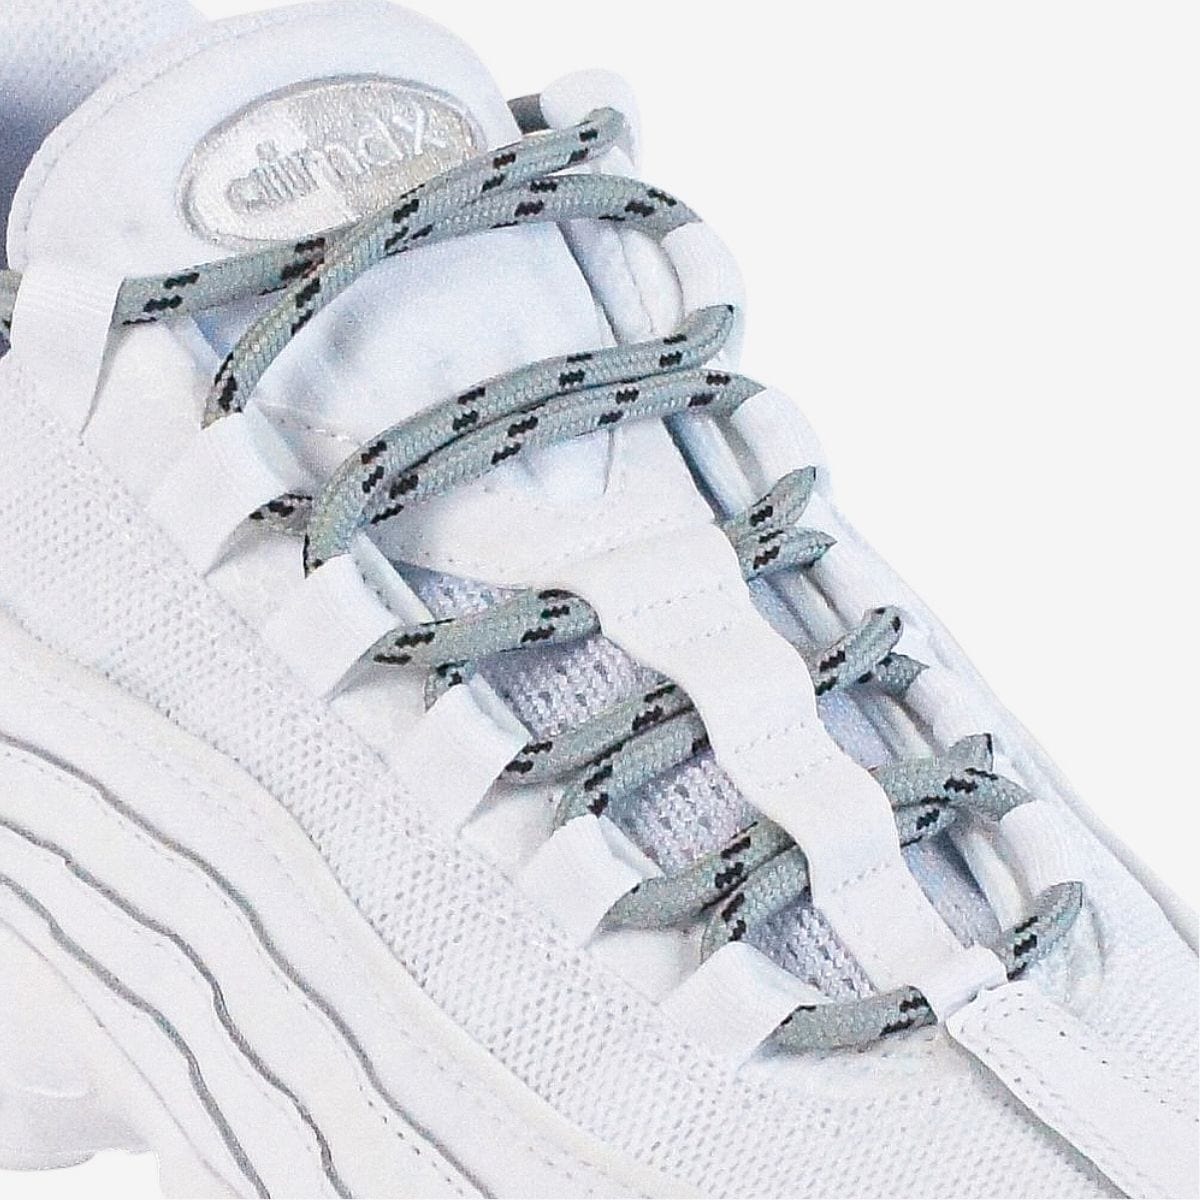 walking-shoe-laces-online-in-australia-colour-light-grey-and-black